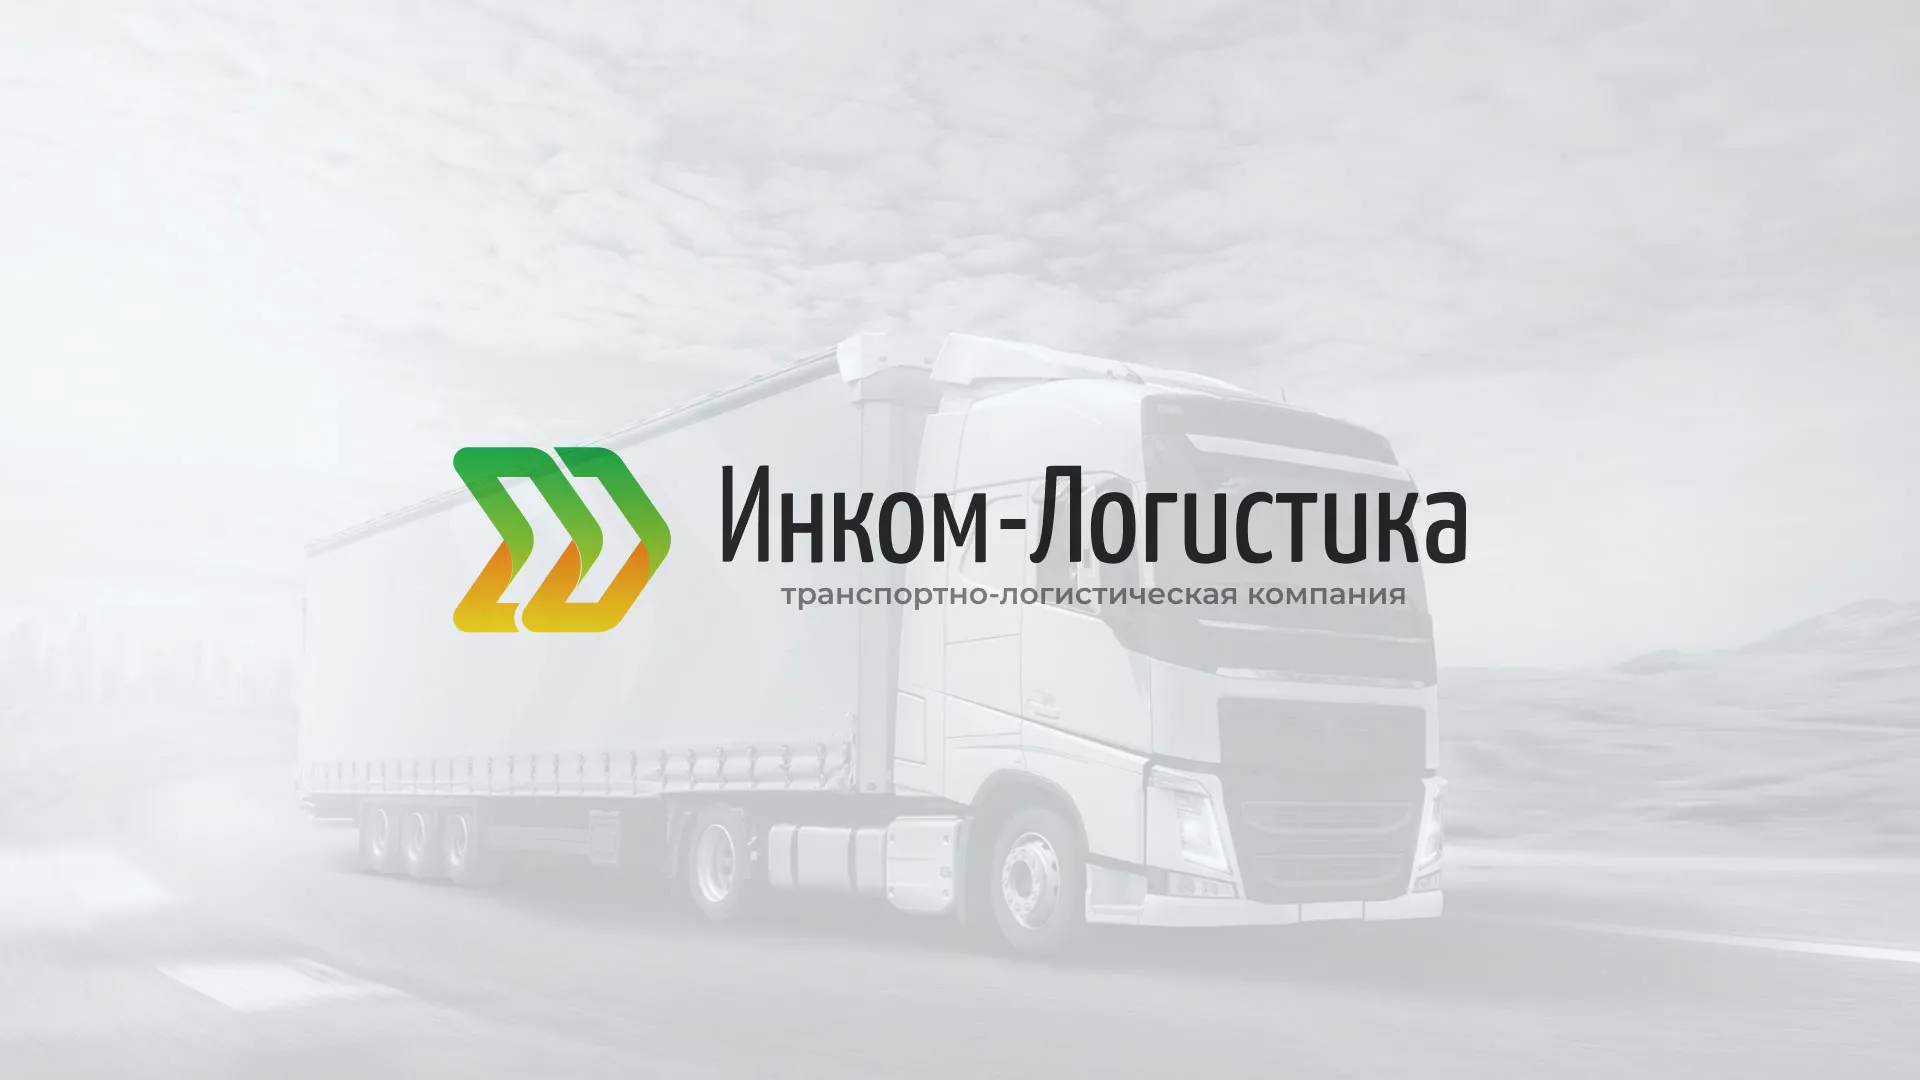 Разработка логотипа и сайта компании «Инком-Логистика» в Орехово-Зуево